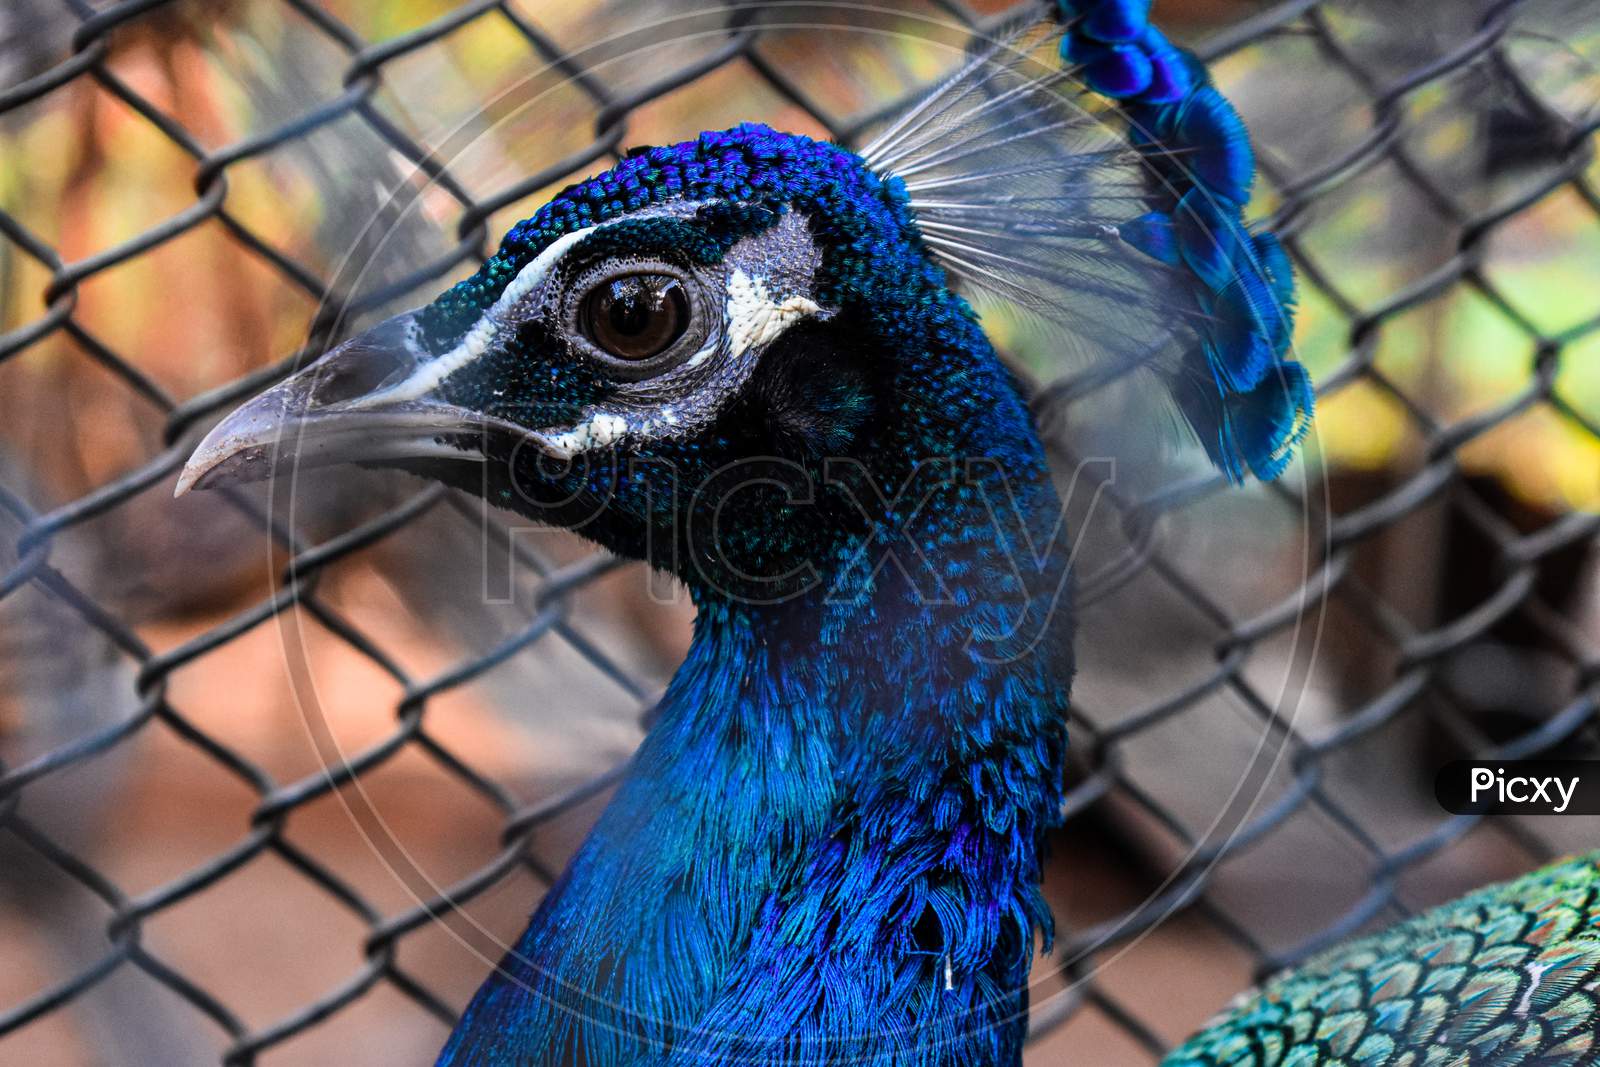 Peacock eye